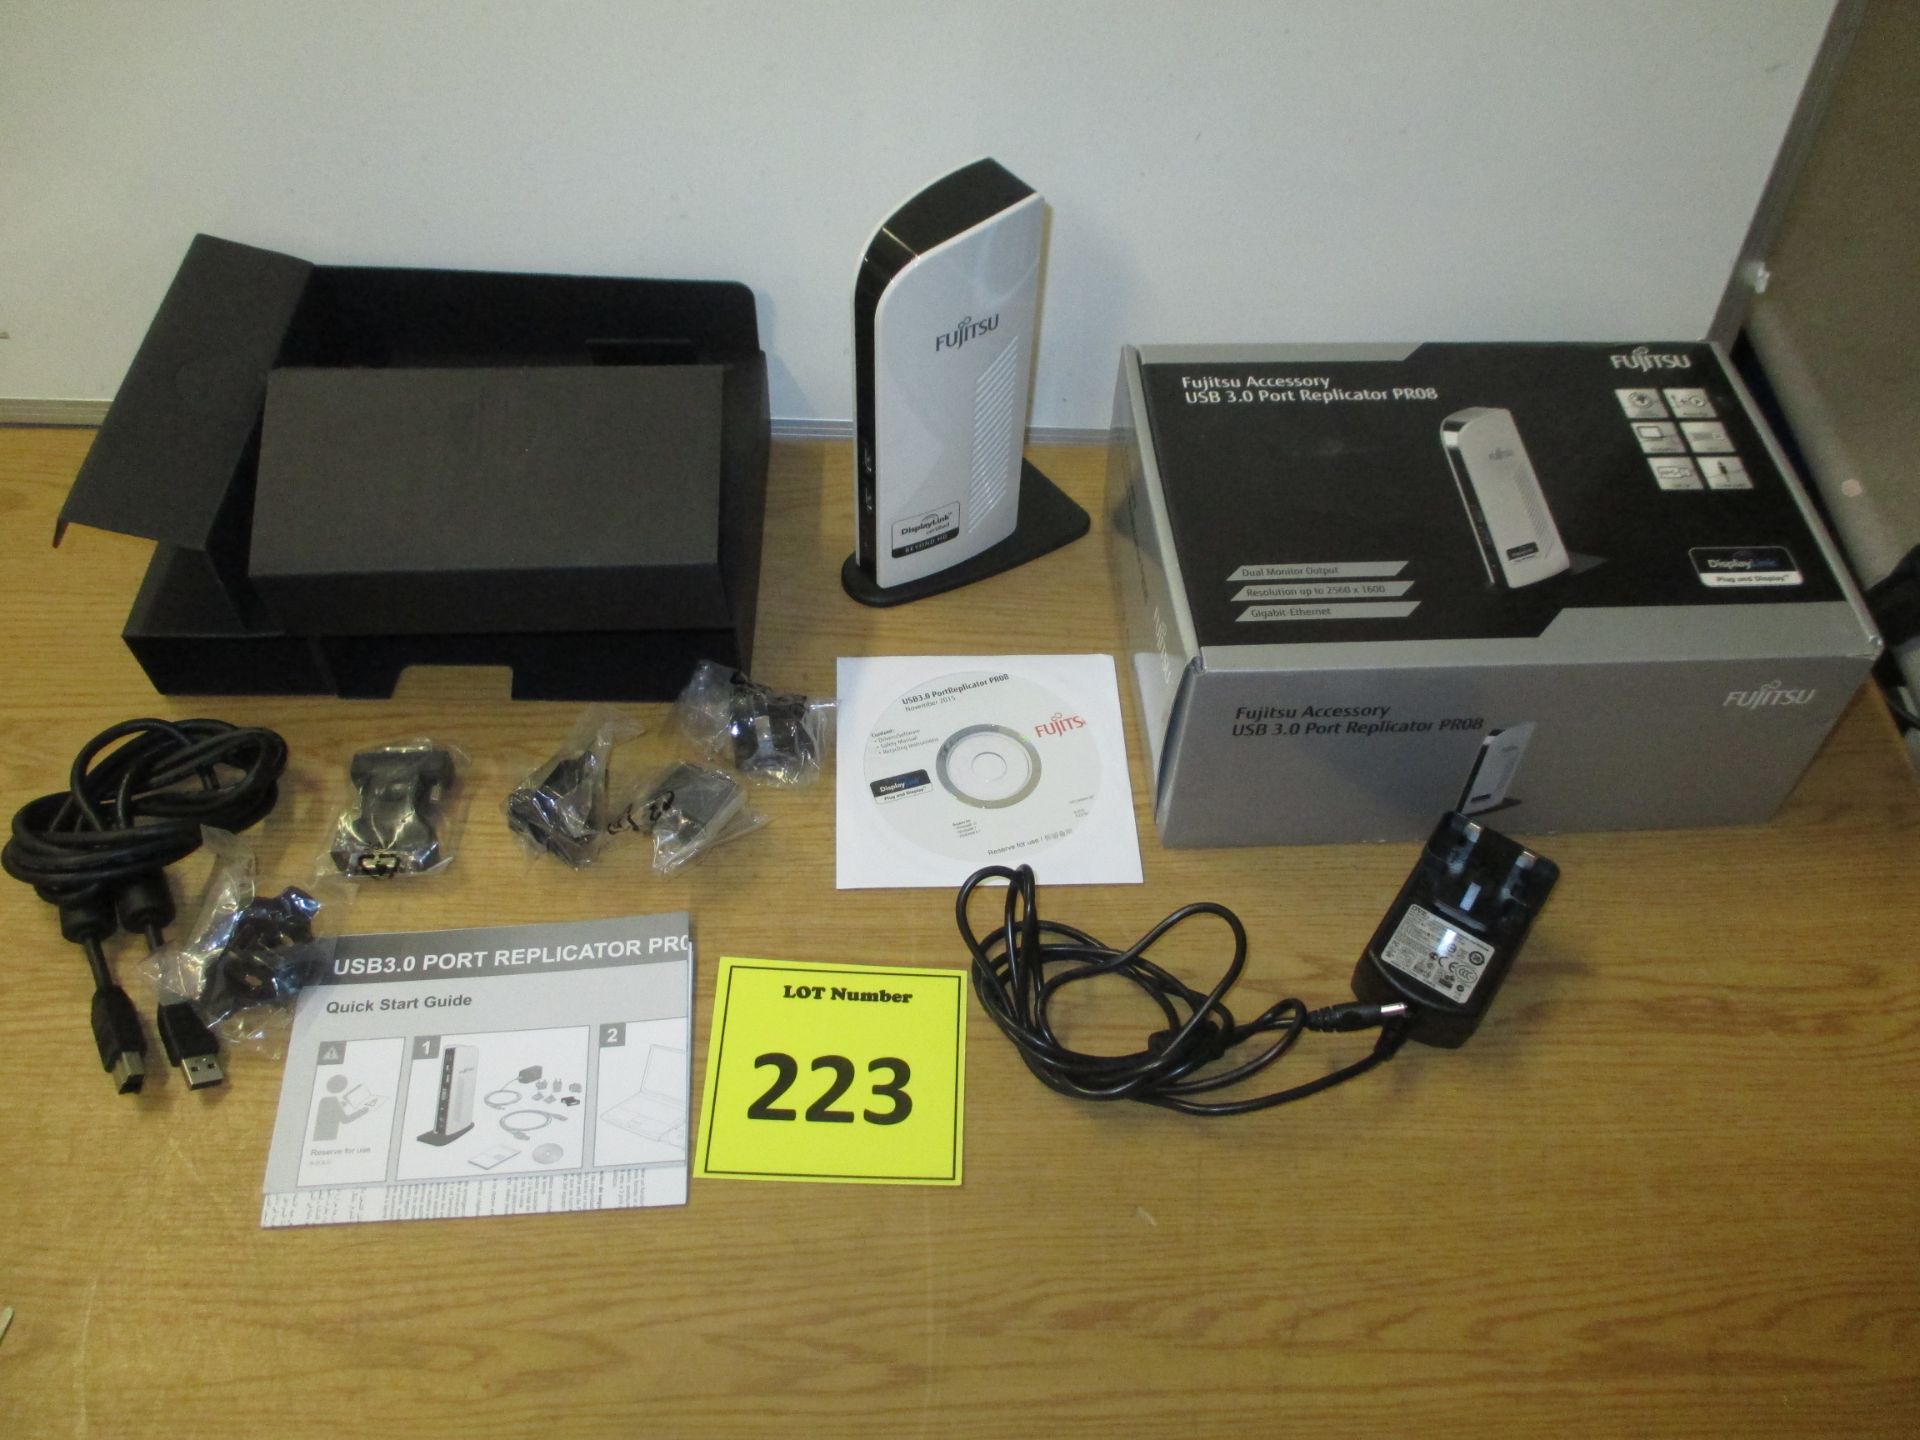 FUJITSU USB 3 PORT REPLICATOR PR08. BOXED WITH SOFTWARE, INSTRUCTIONS, PSU, USB 3 CABLE &